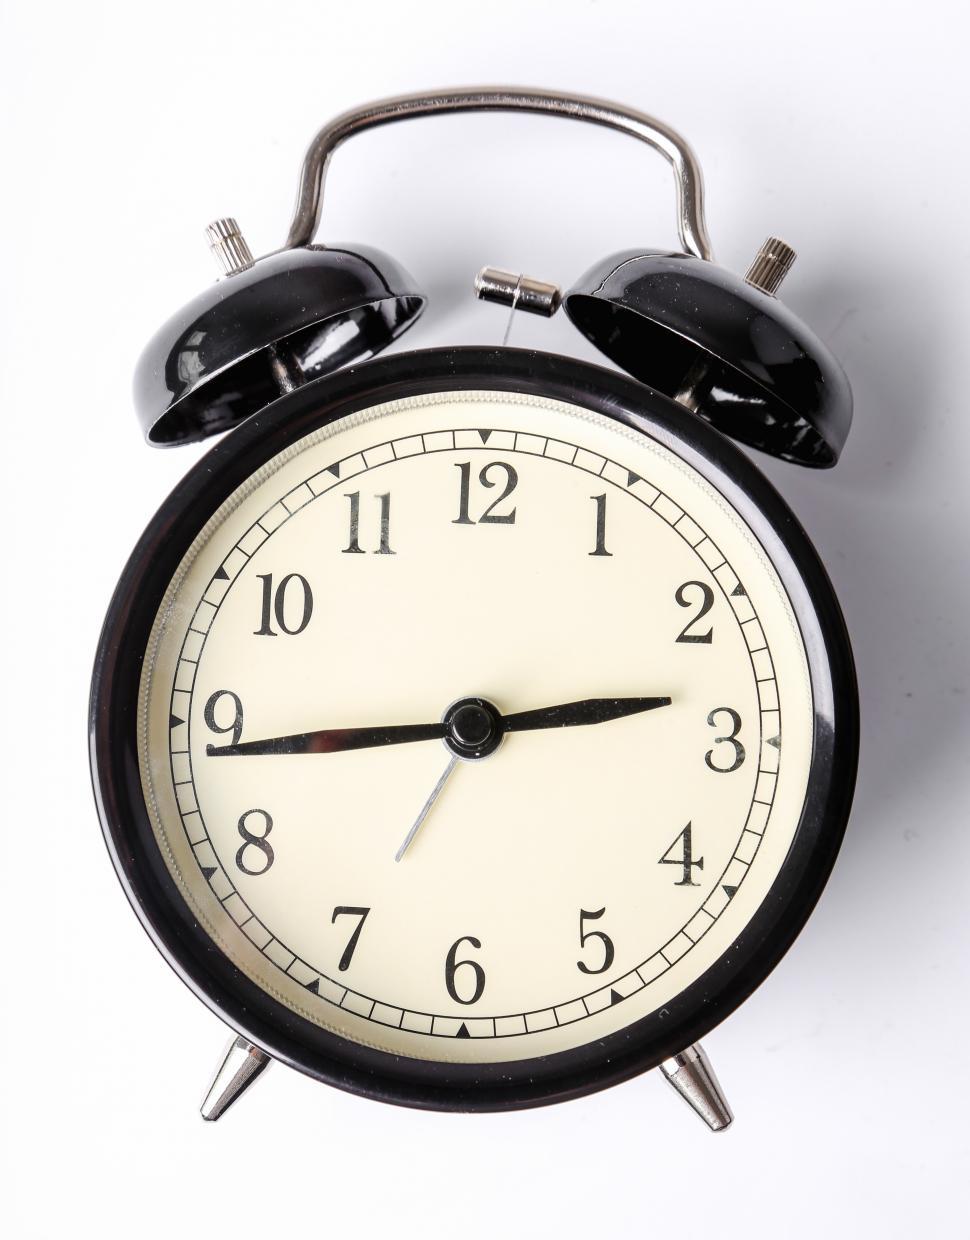 Free Image of Vintage style alarm clock 